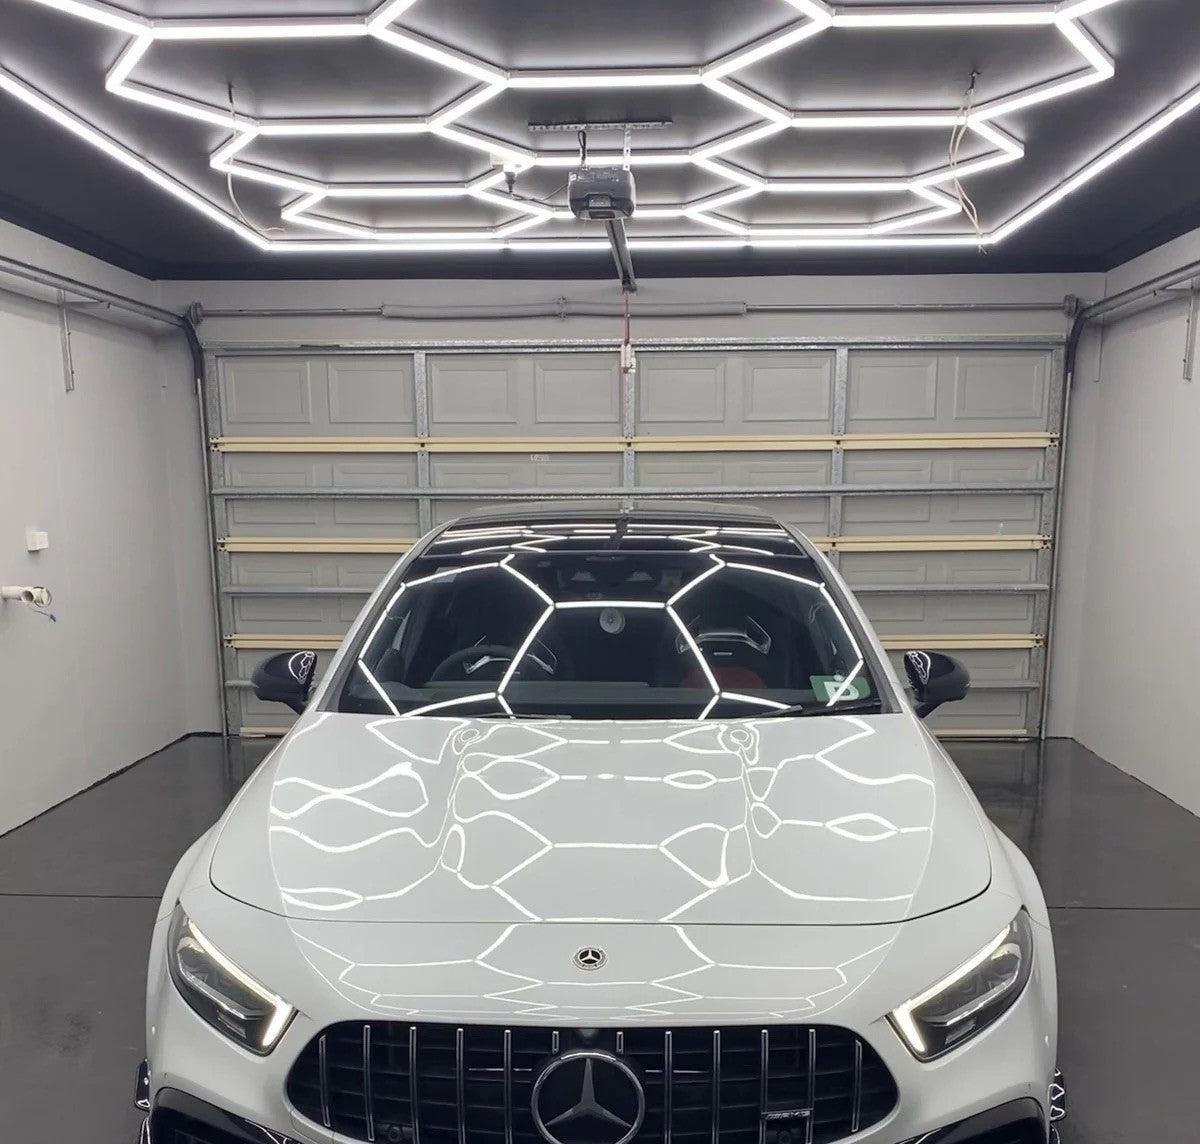 Hexagon lighting kit installed in garage